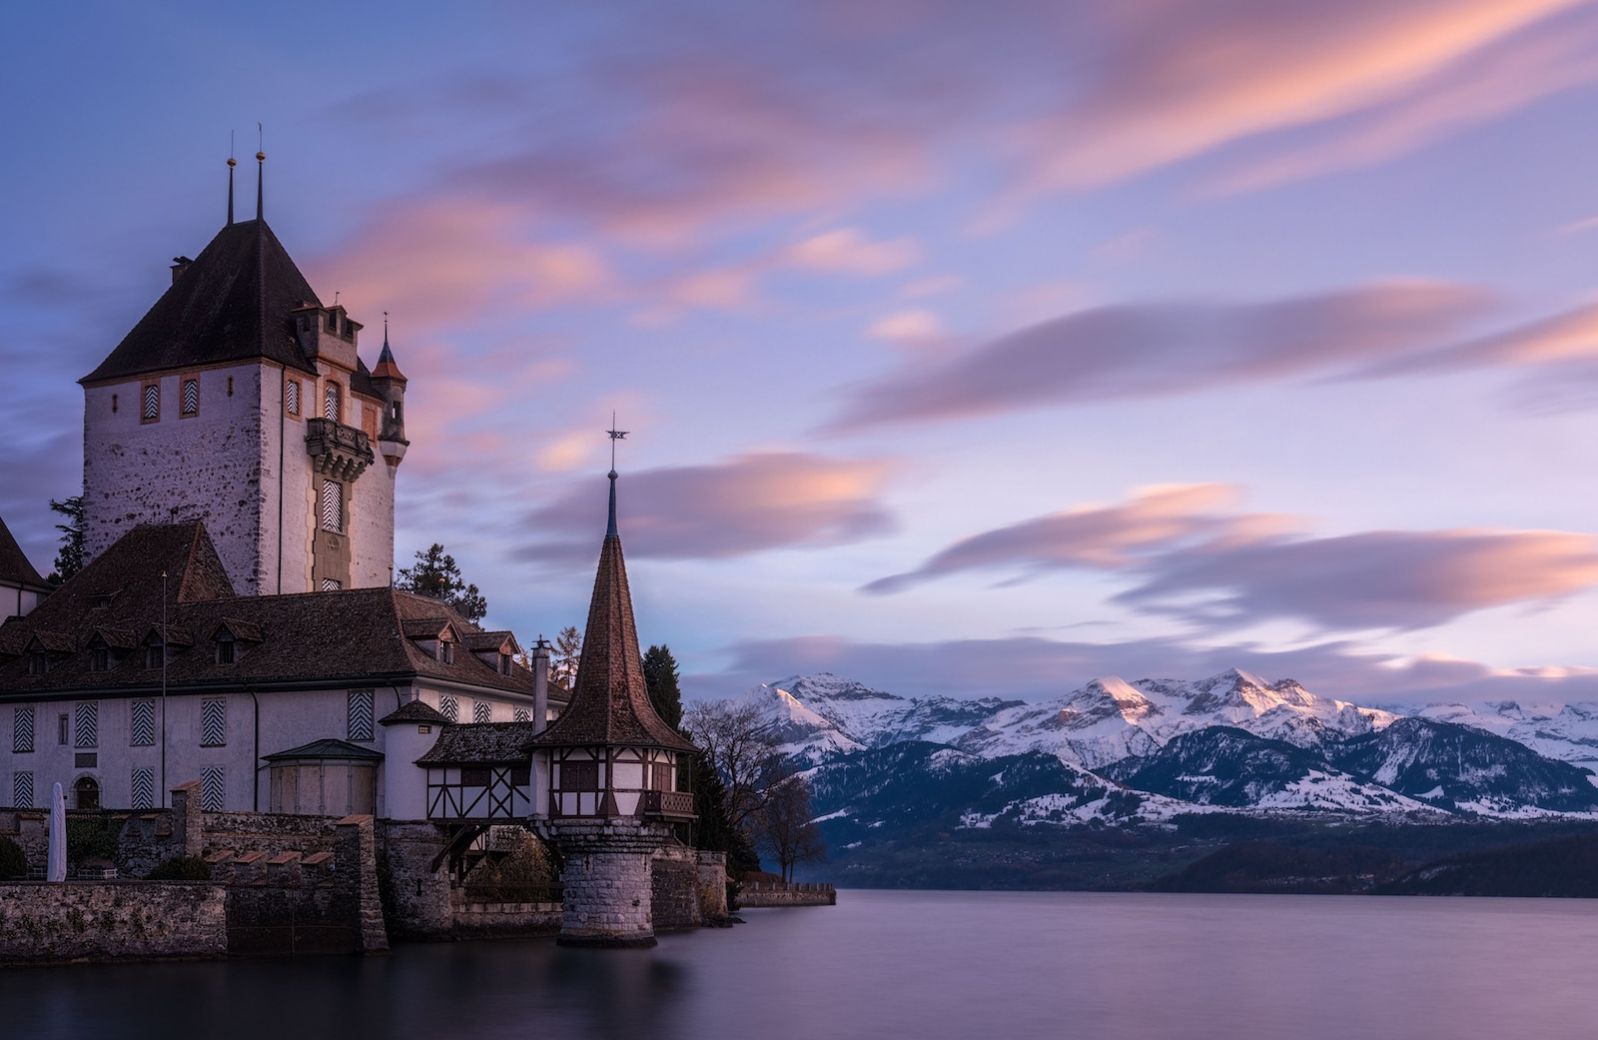 Thun, Lake Thunersee, Switzerland, mountains, Oberhofen castle, snow and sunset, photo by Samuel Ferrara